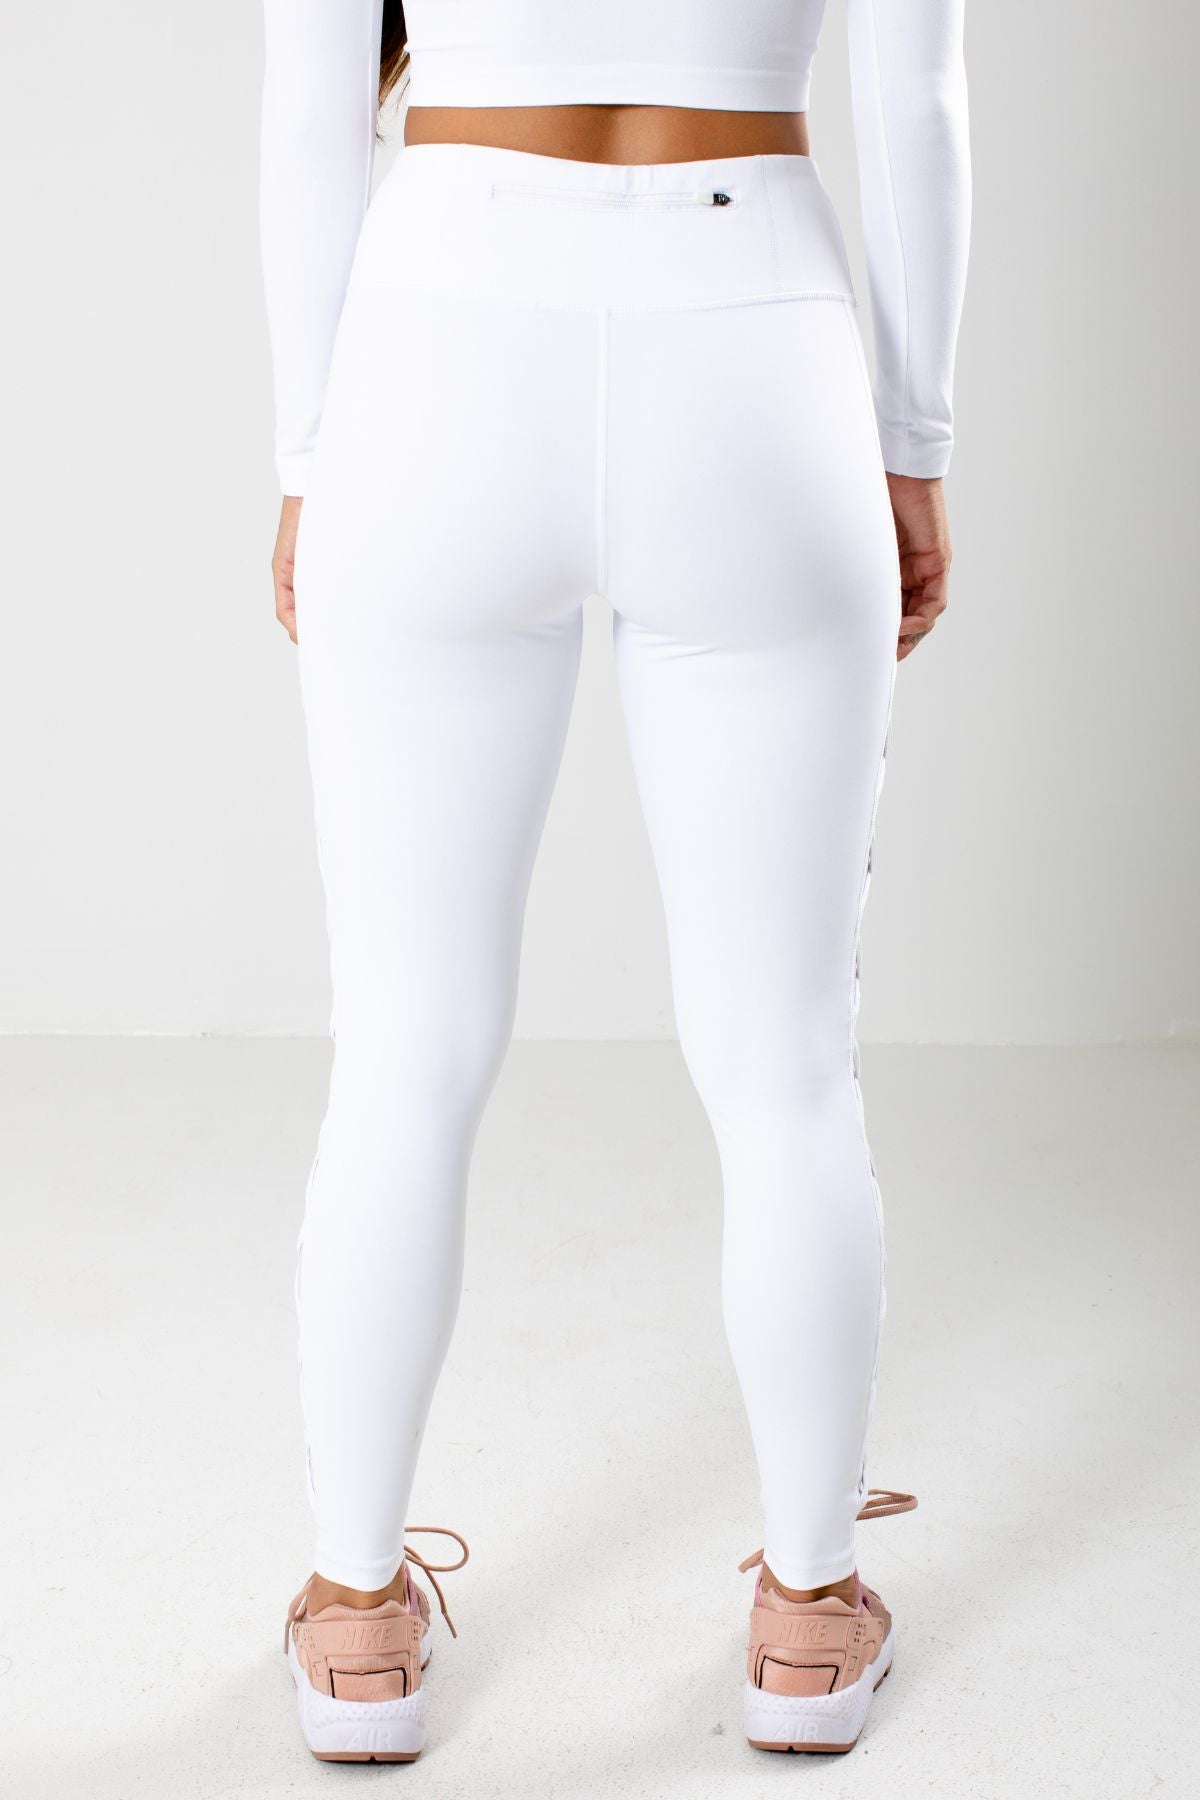 Women's White Lattice Detailed Boutique Activewear Leggings